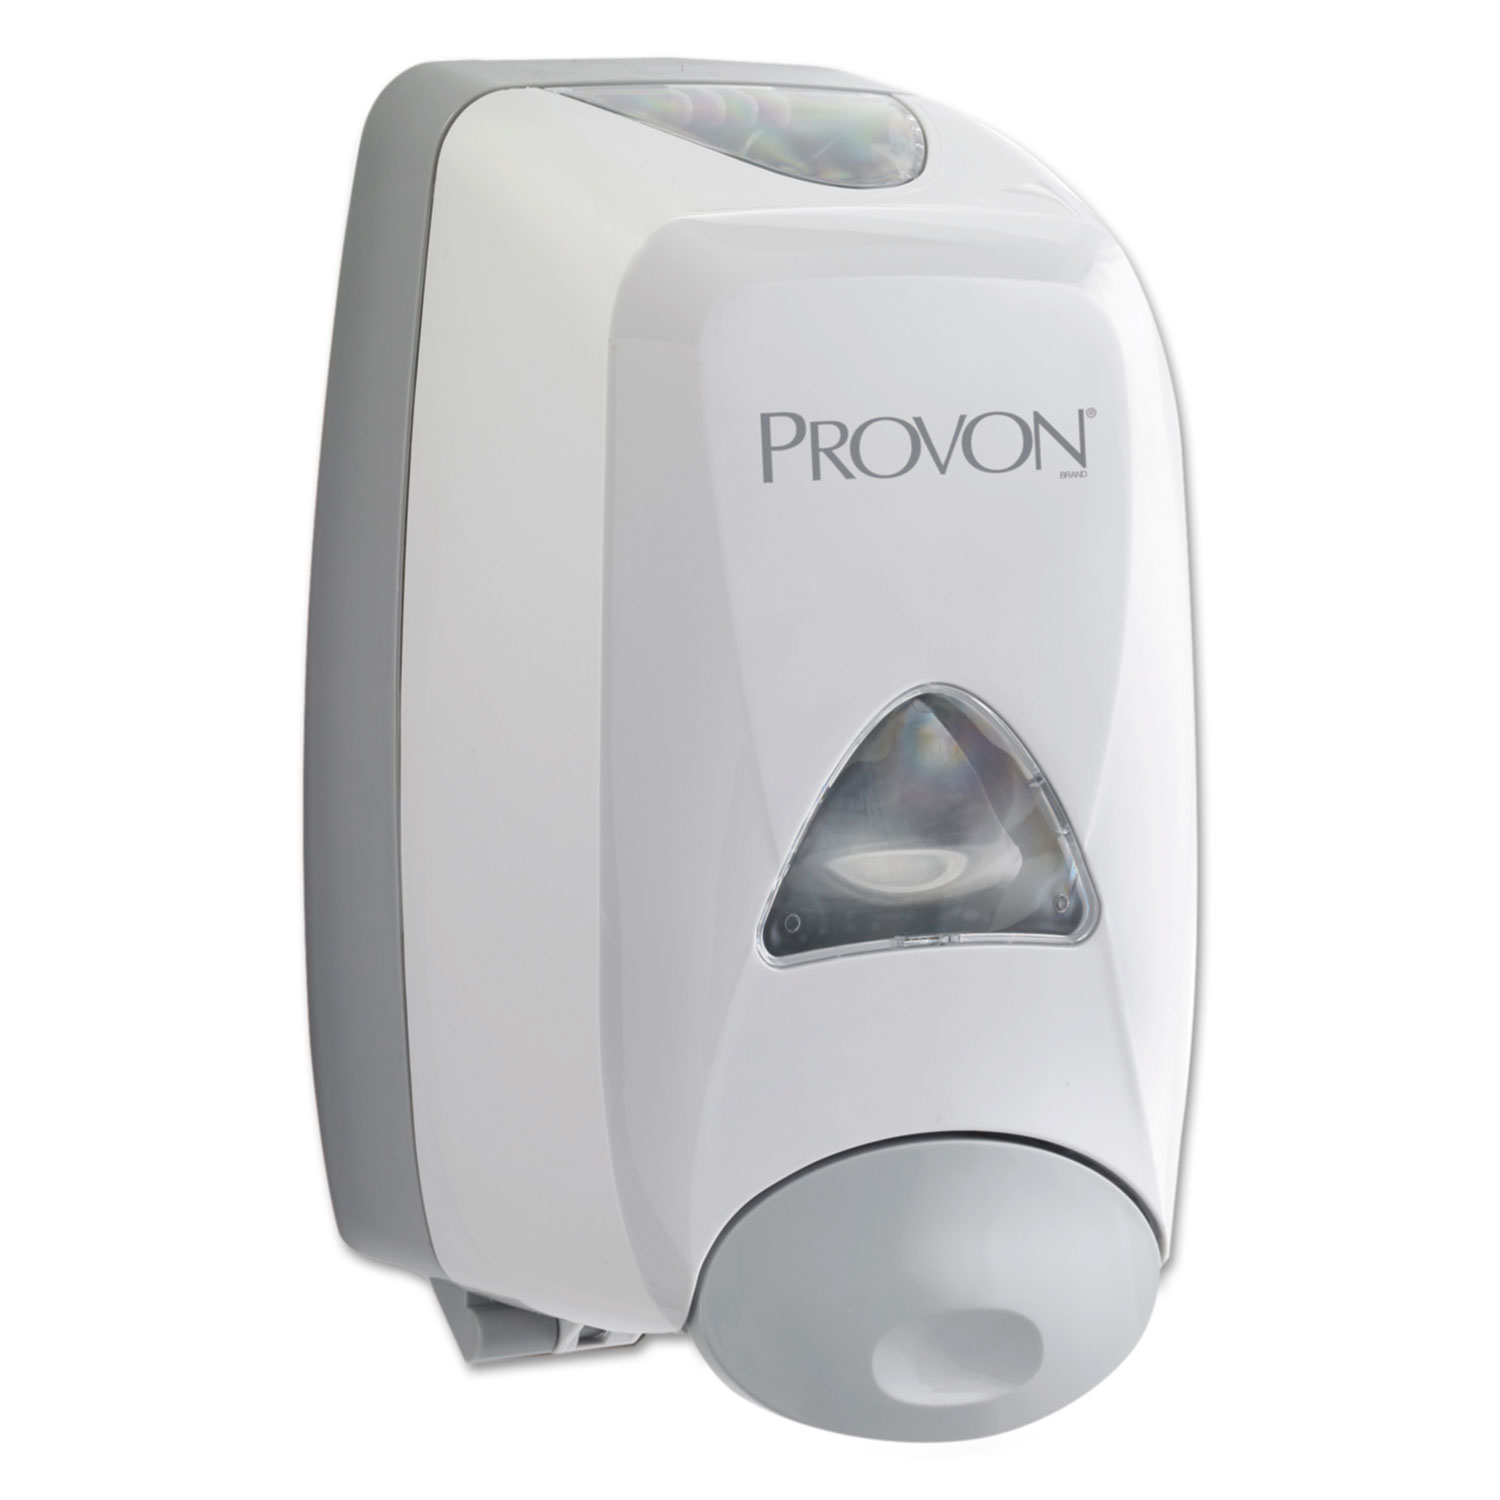 Provon GOJO INDUSTRIES Provon FMX-12 Soap Dispenser, 1250 mL, Gray, 1 Each (GOJ516006)